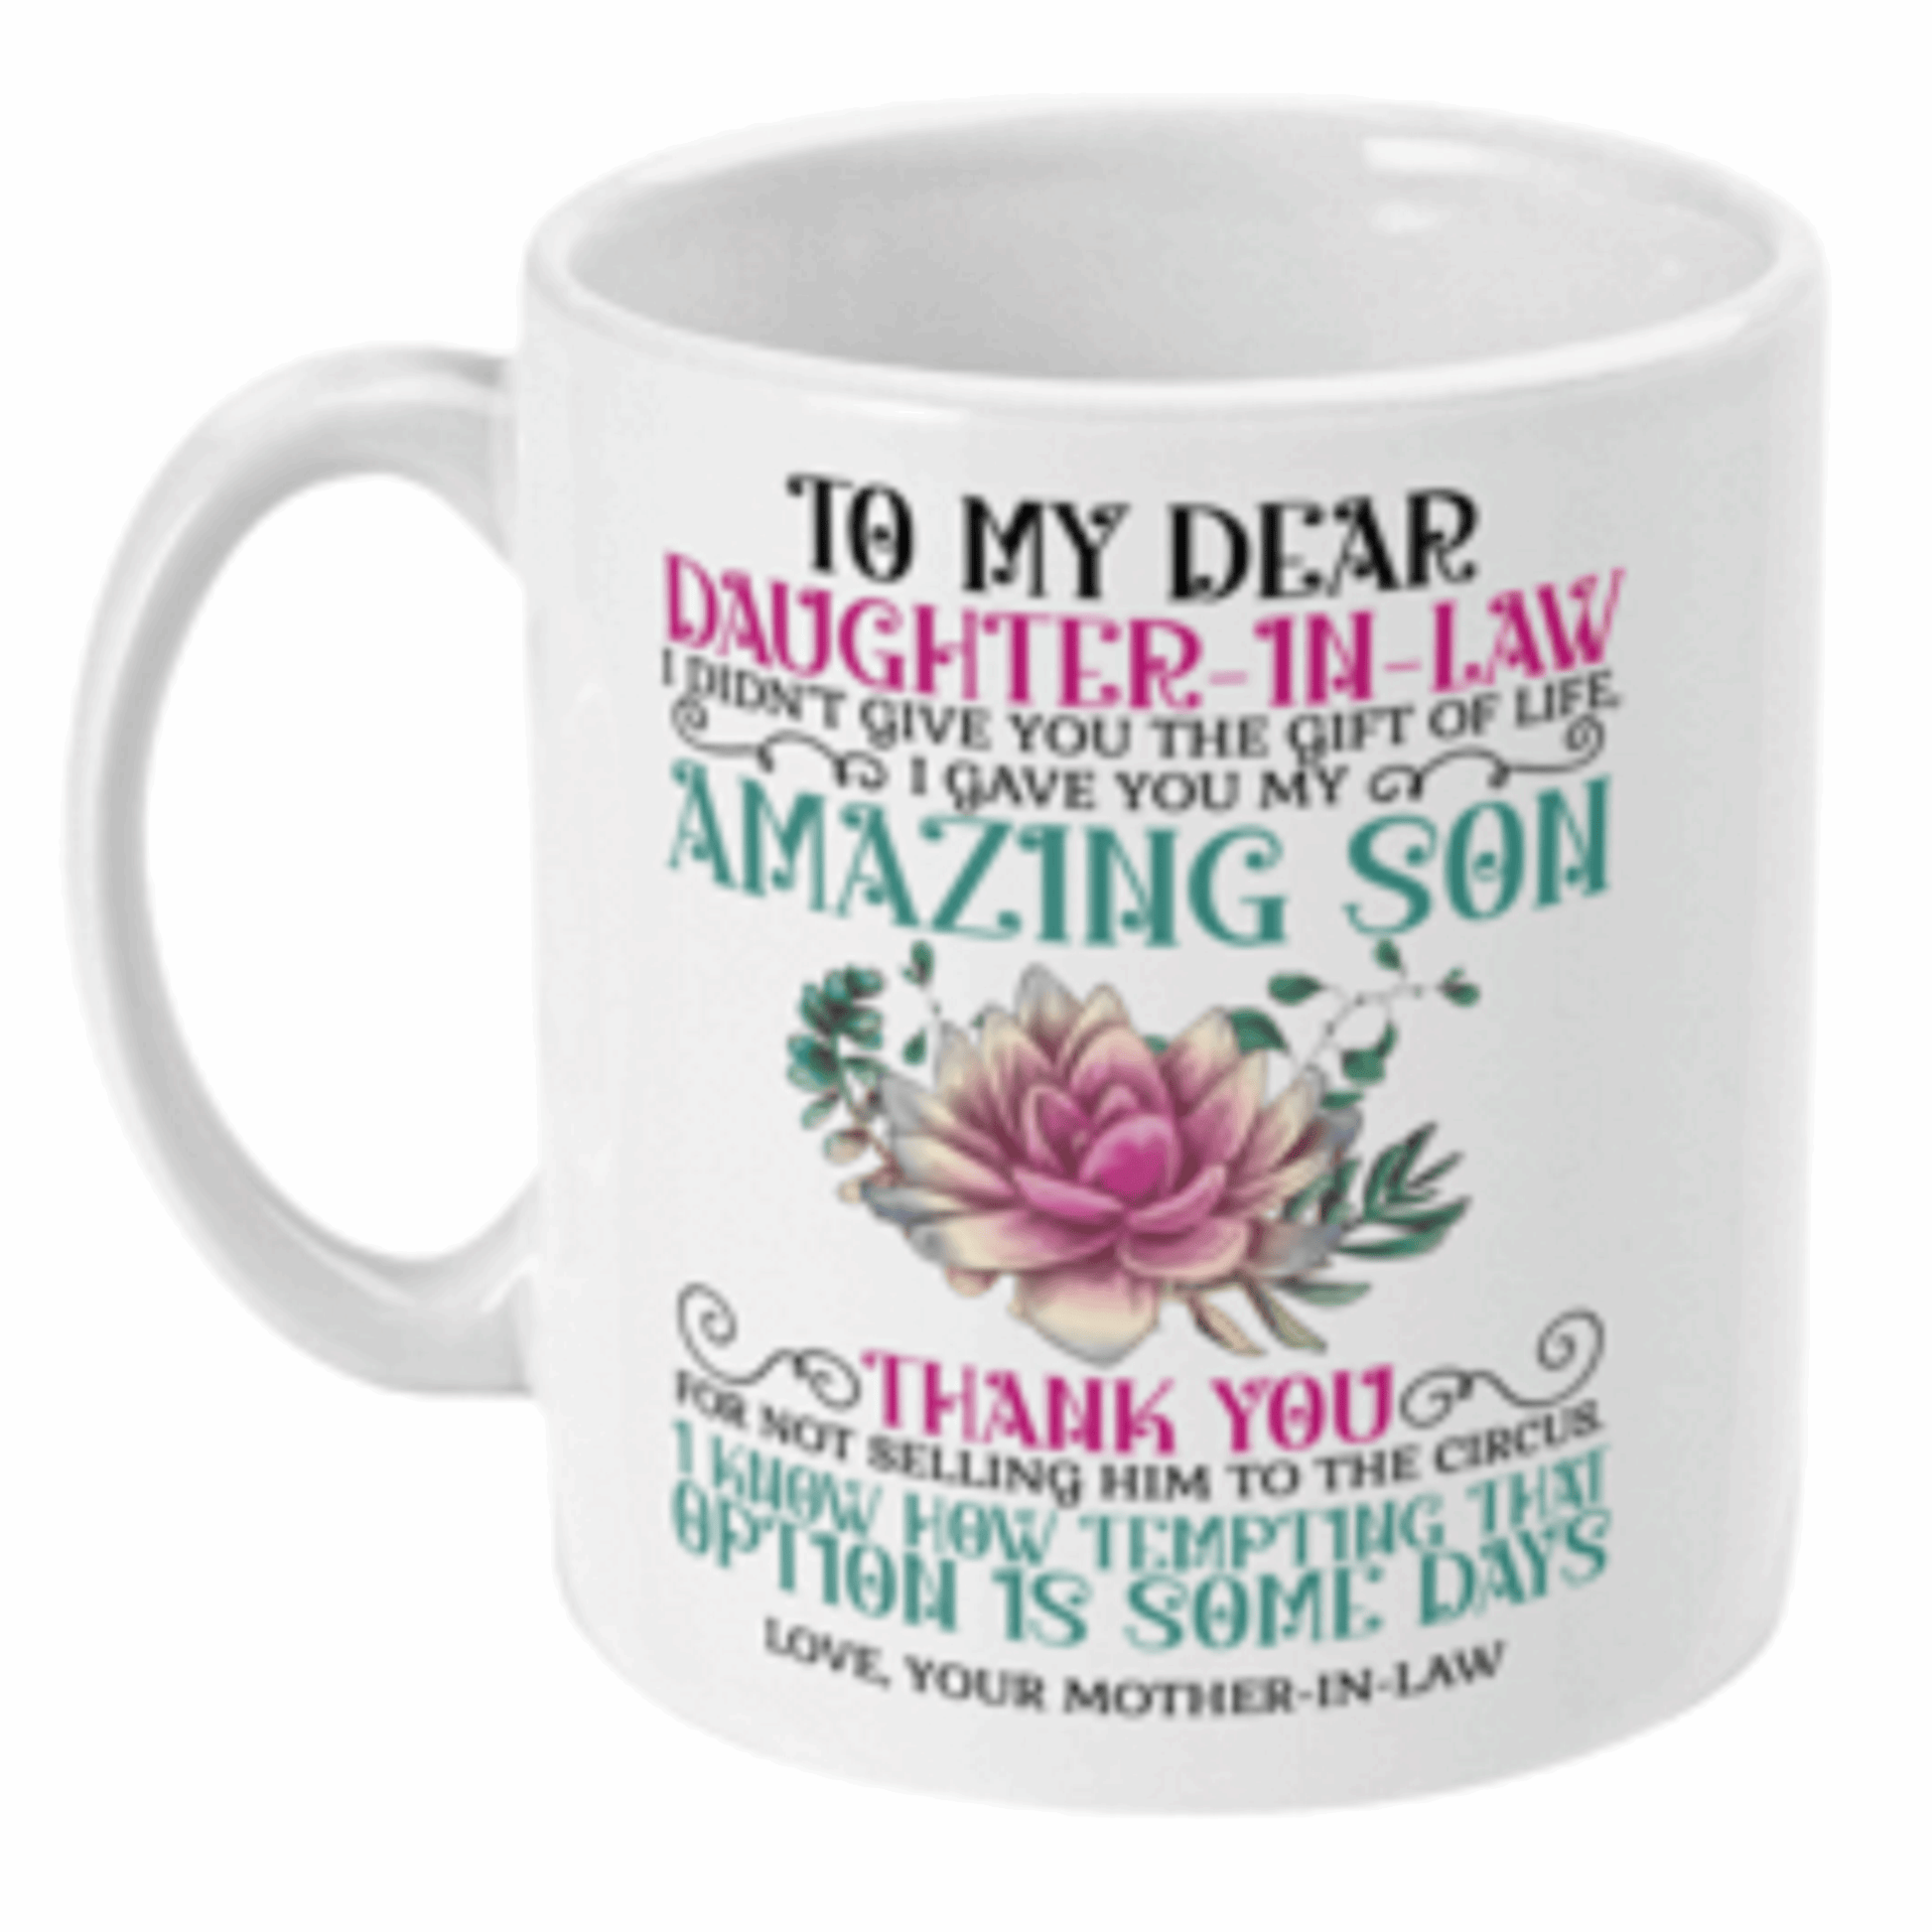  Beautiful Daughter in Law Coffee Mug by Free Spirit Accessories sold by Free Spirit Accessories